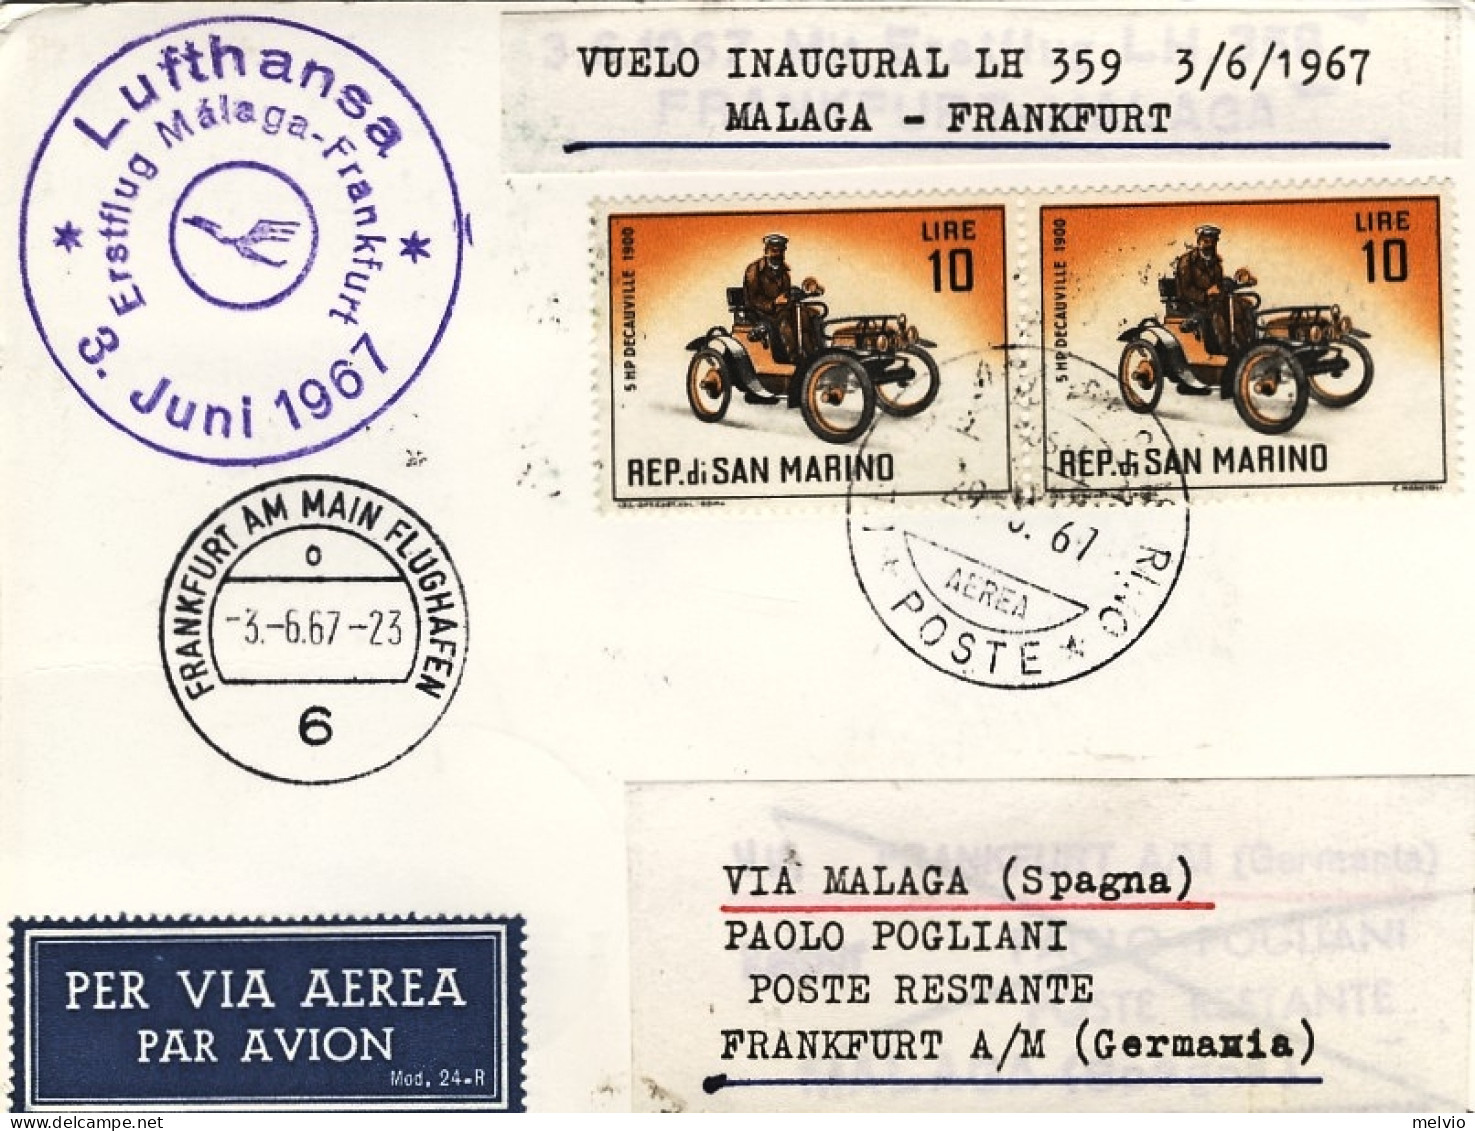 San Marino-1967 I^volo Lufthansa Malaga (Spagna) Francoforte - Luftpost